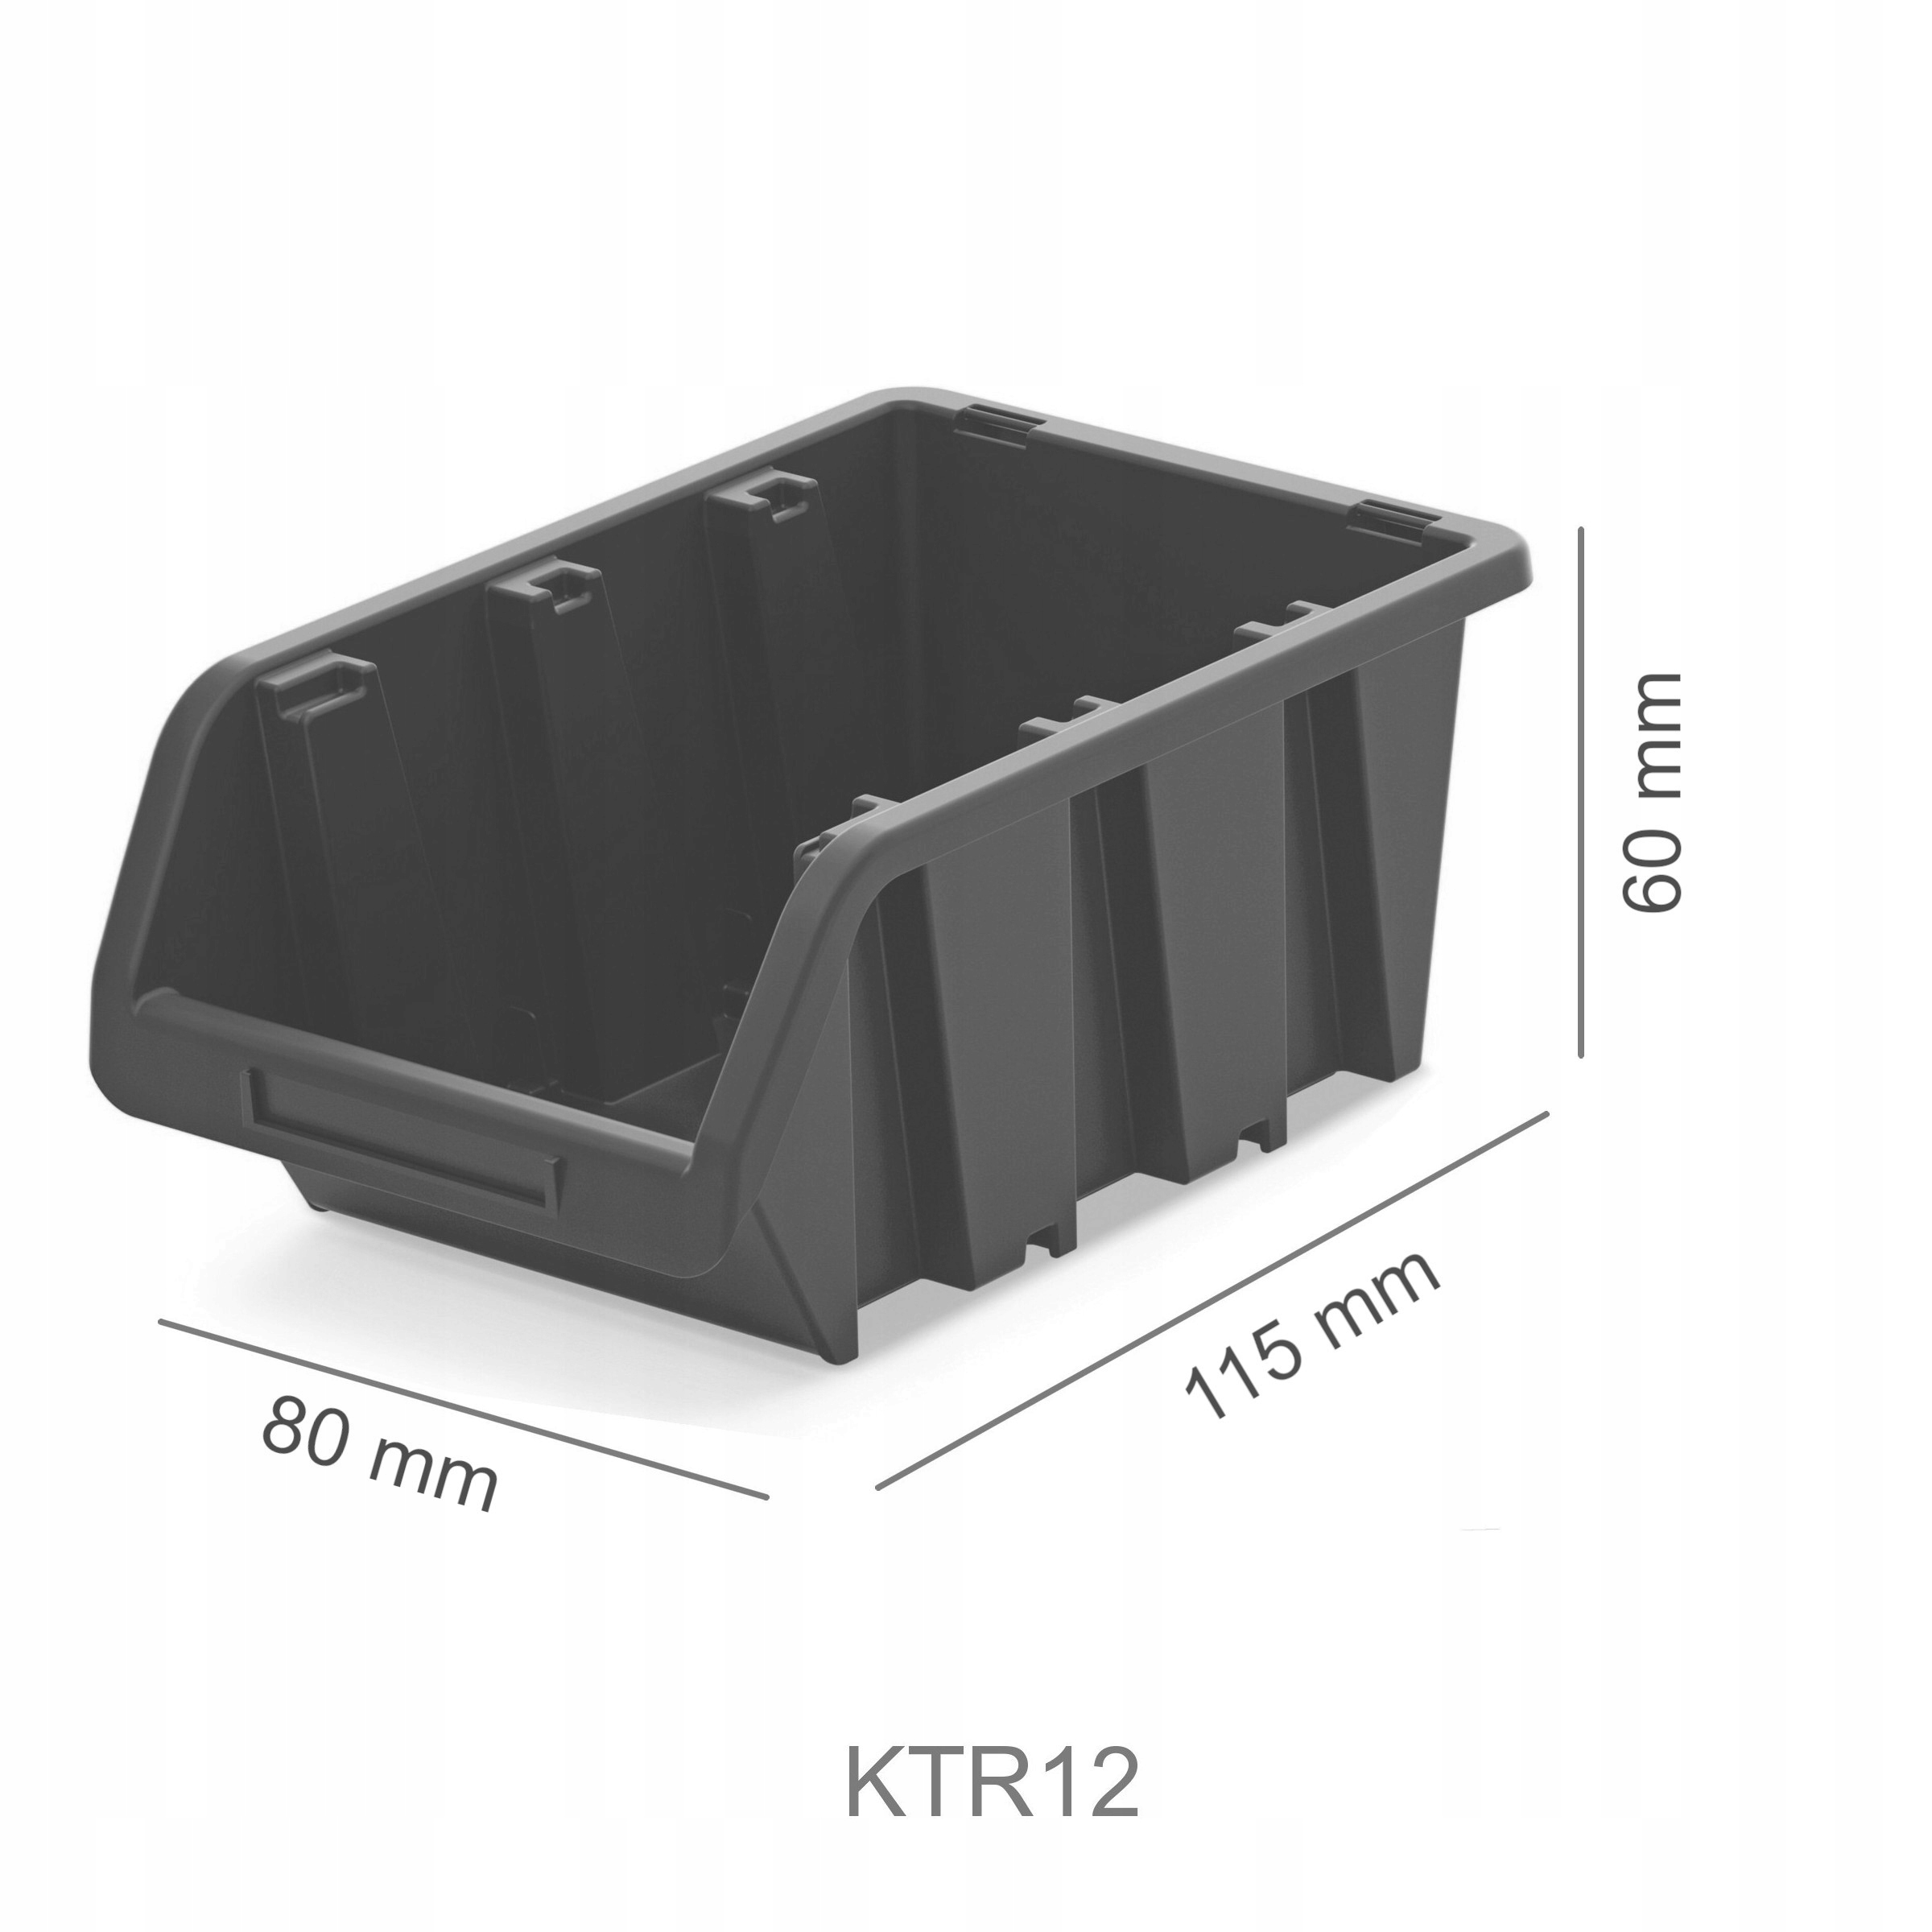 TRUCK KTR12 kuweta pojemnik mag. 11,5x8x6cm Rodzaj pojemnika kuweta